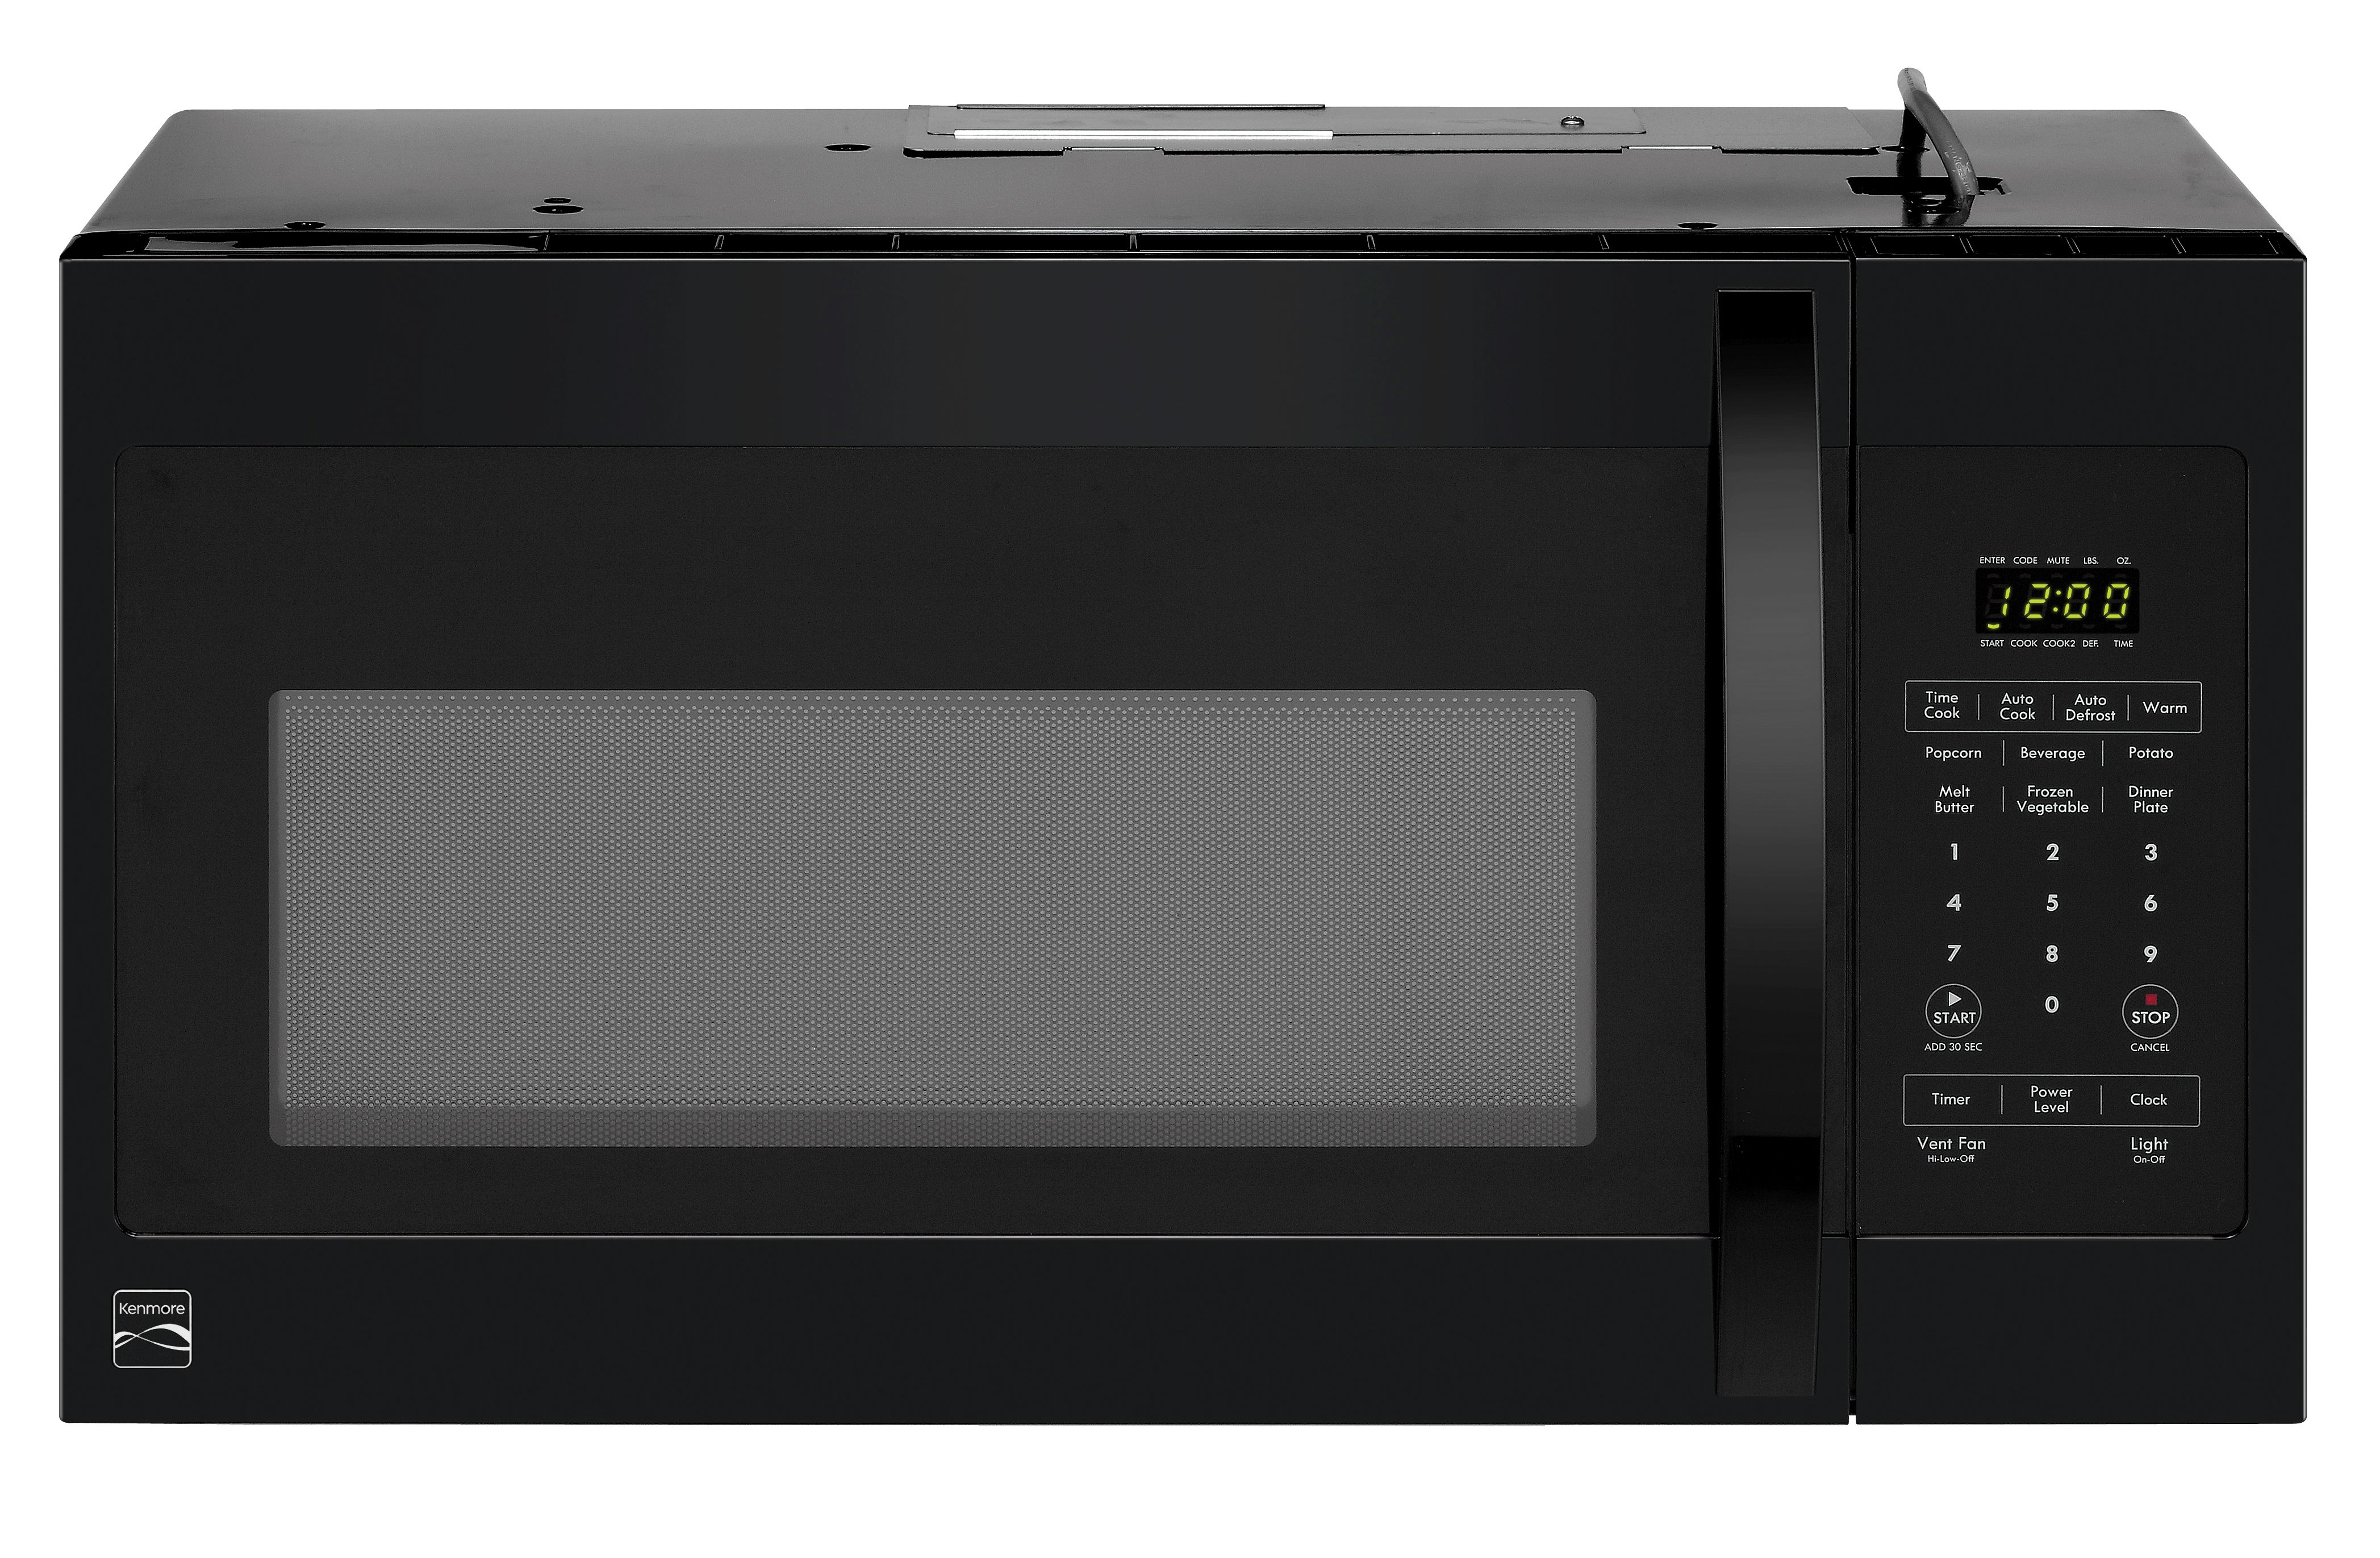 Kenmore 83529 1.6 cu. ft. OvertheRange Microwave Oven Black